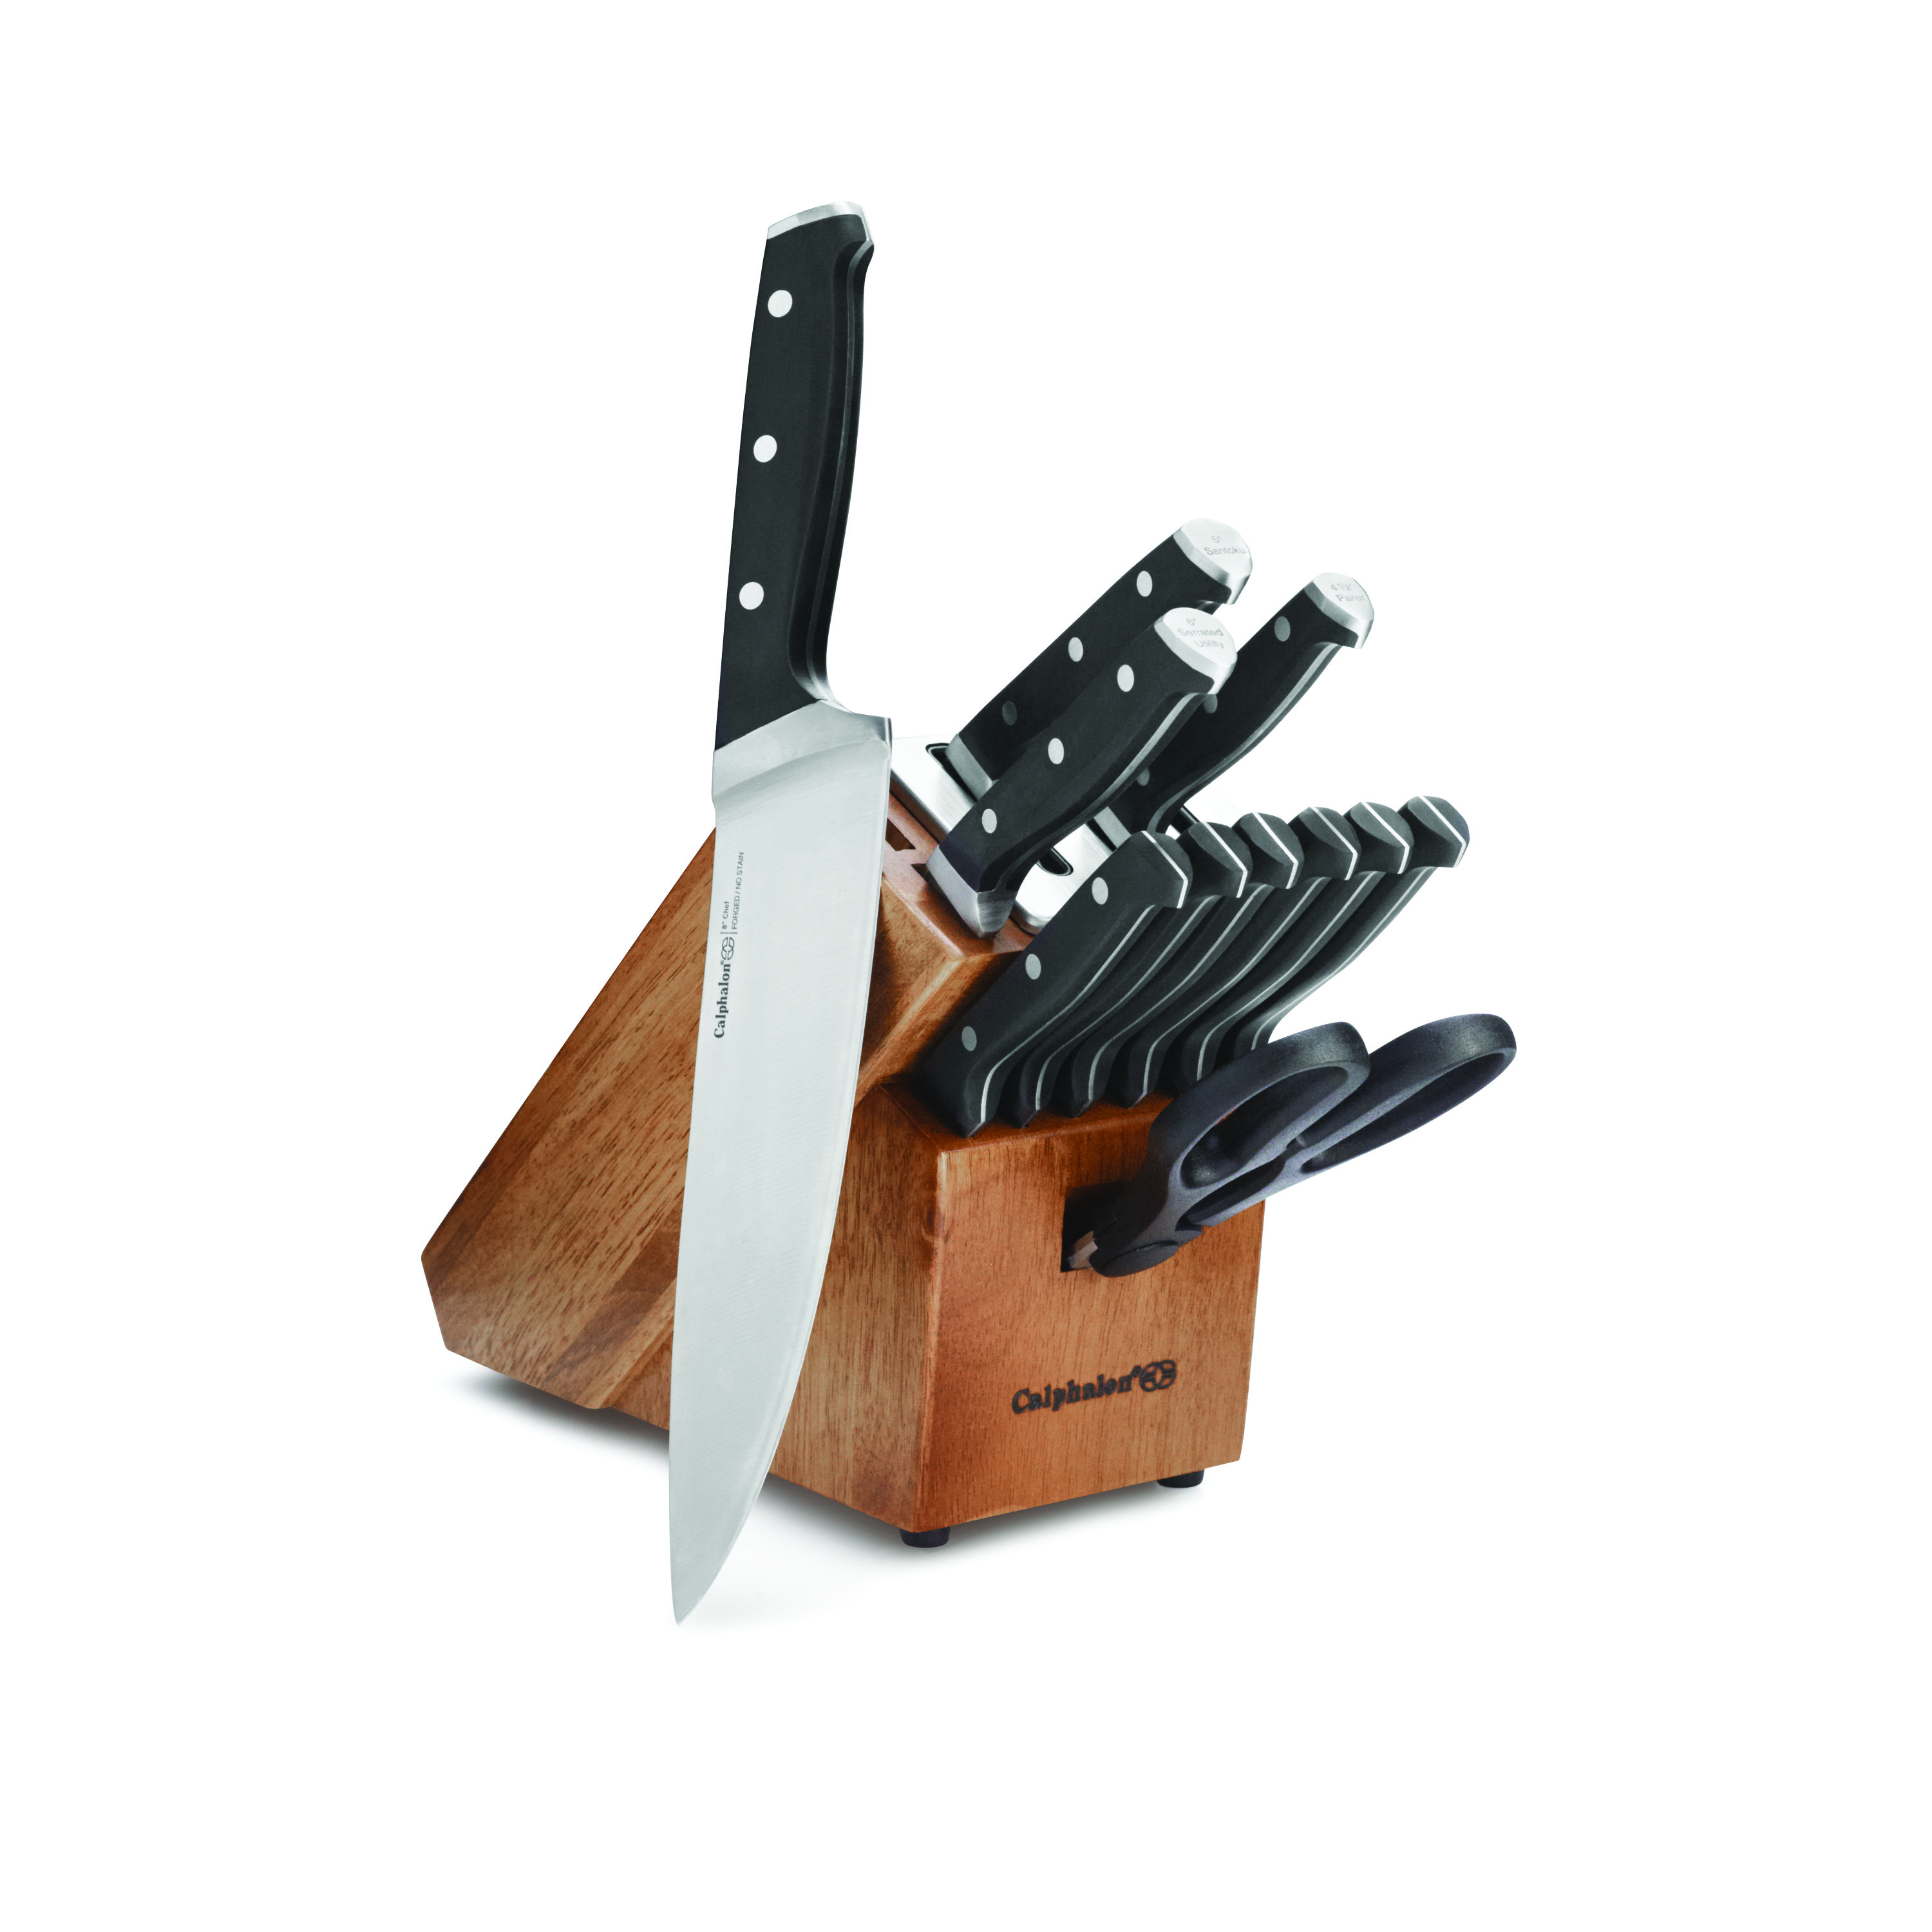 Calphalon Classic Self-Sharpening 12-pc. Cutlery Set with SharpIN Technology